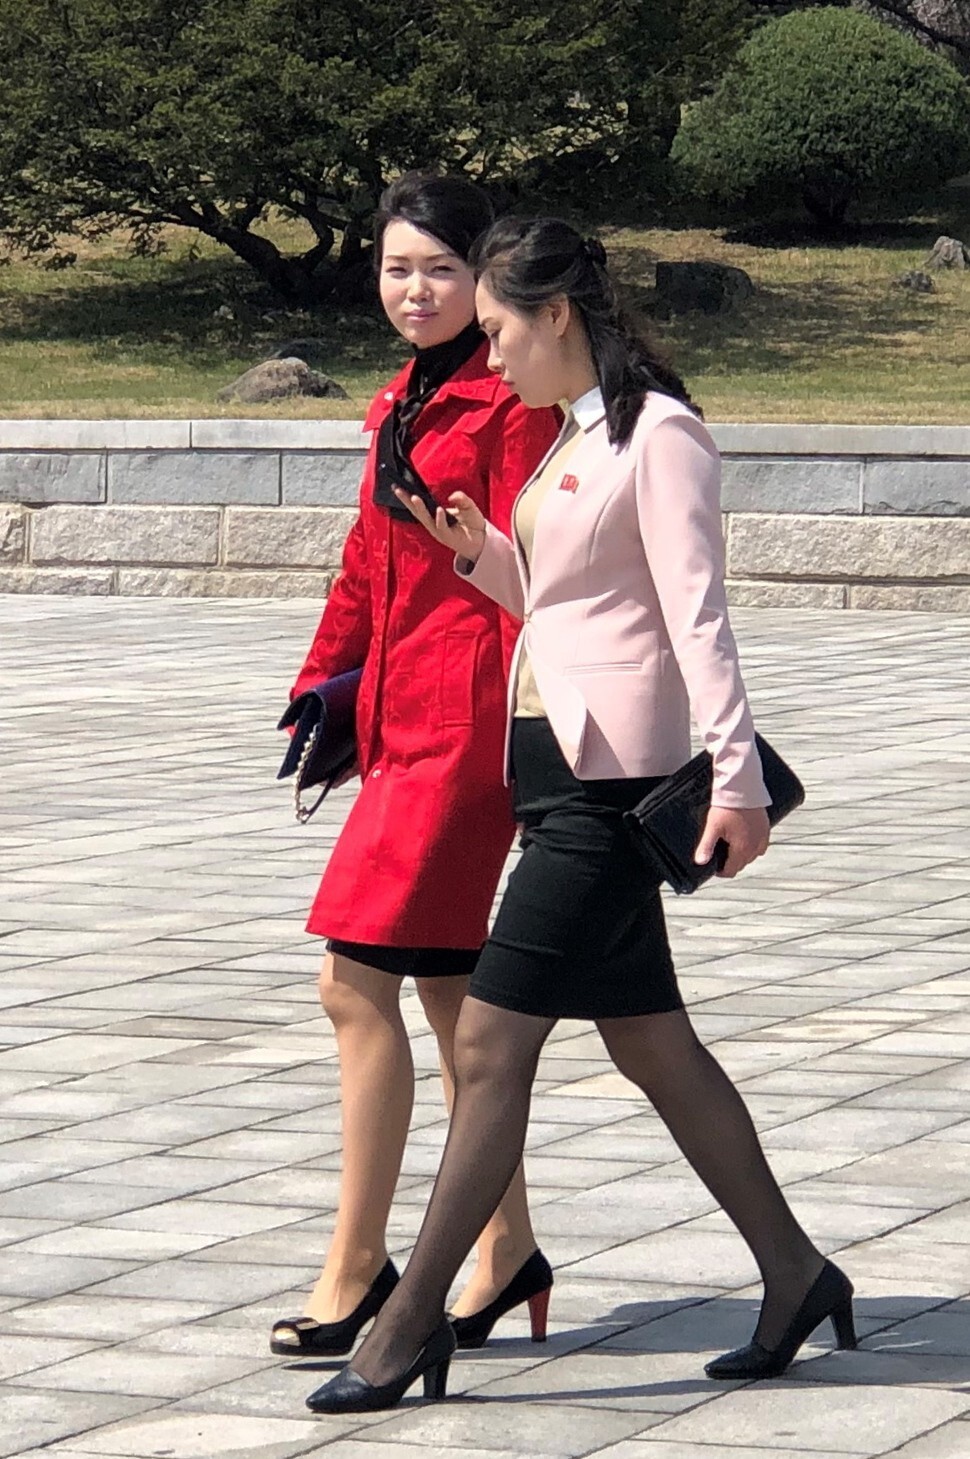 North Korean women in Pyongyang on Apr. 15